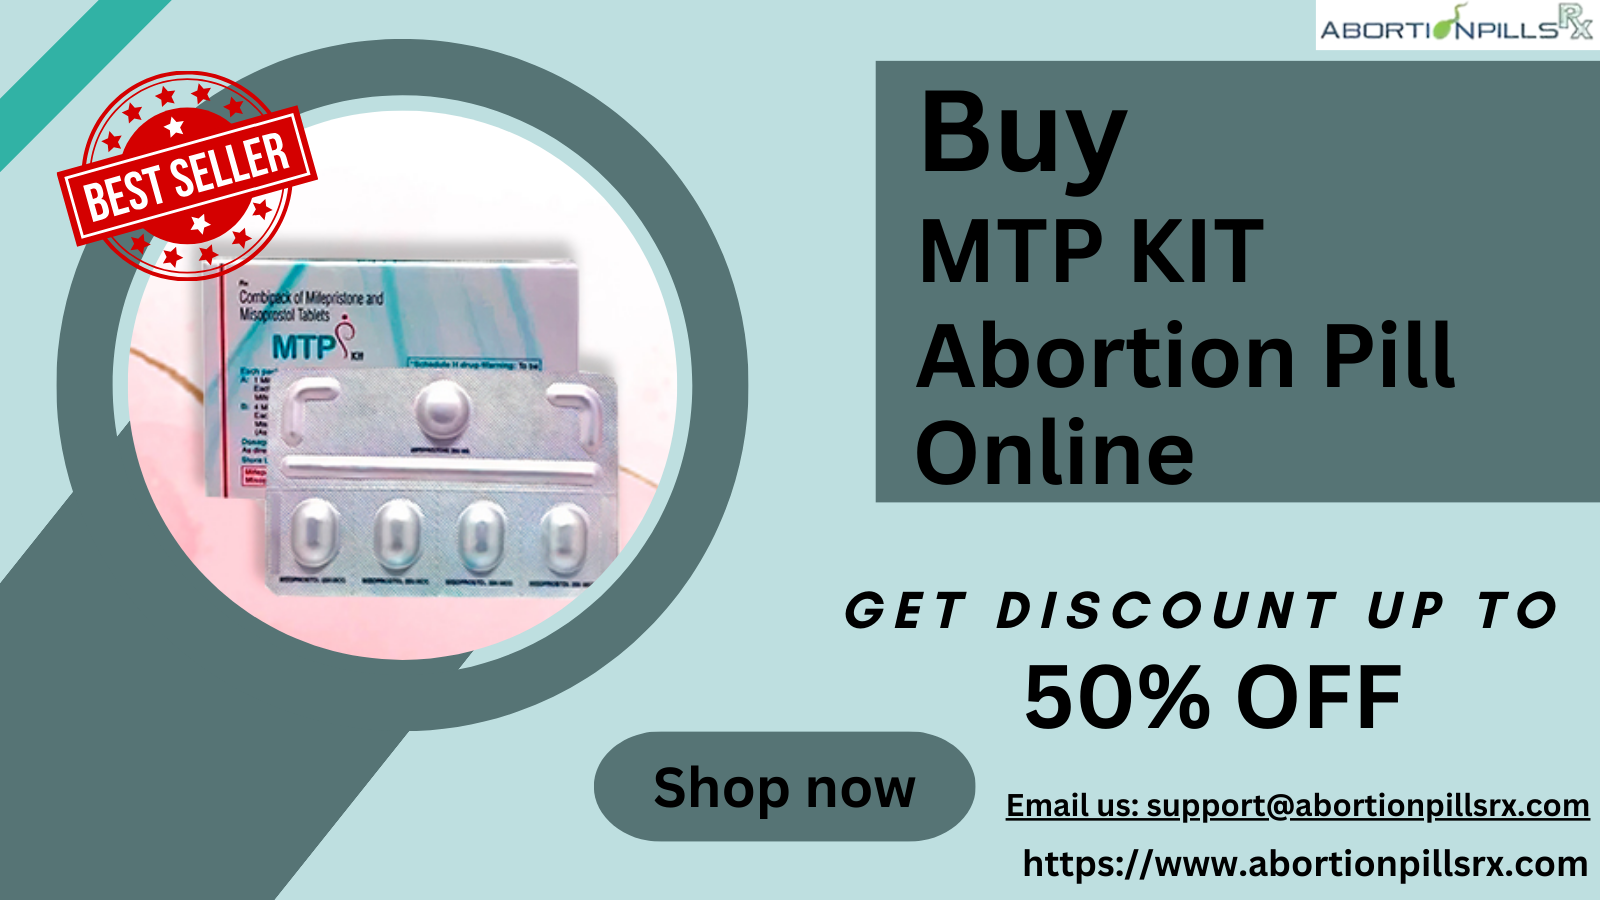 Buy MTP KIT Abortion Pill Online  GET 50 Off  Buy NOW - Georgia - Atlanta ID1513255